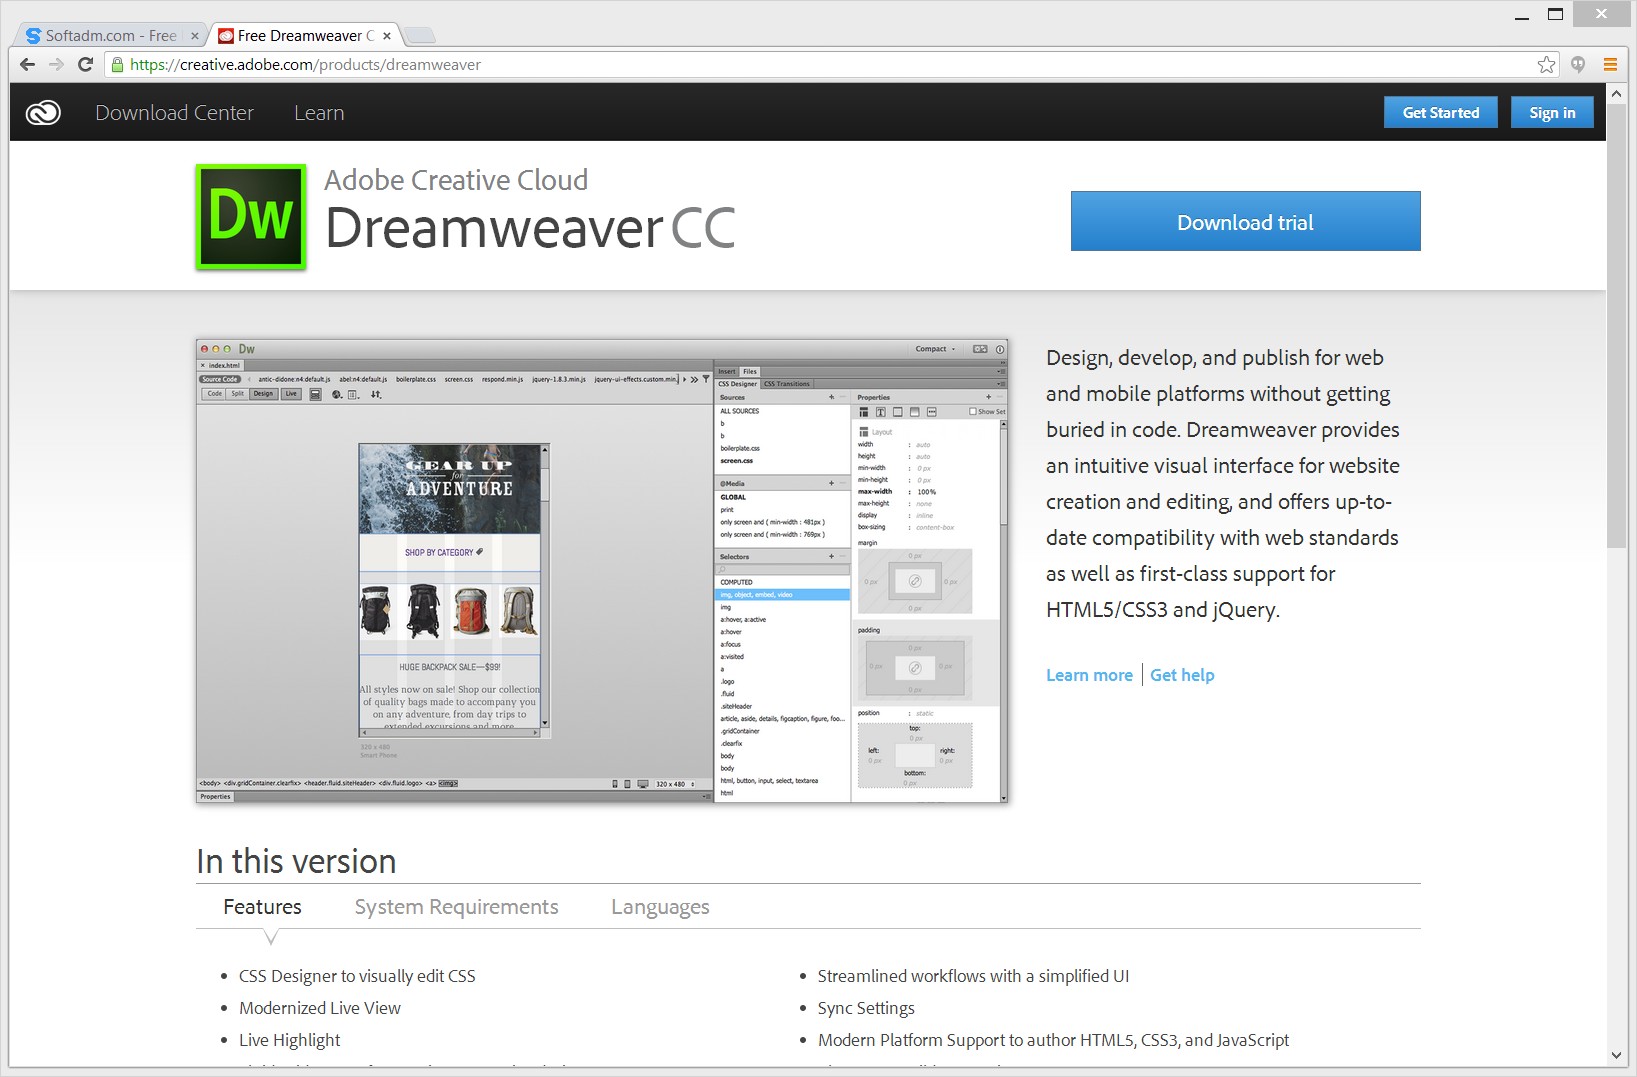 adobe dreamweaver cs6 for mac download